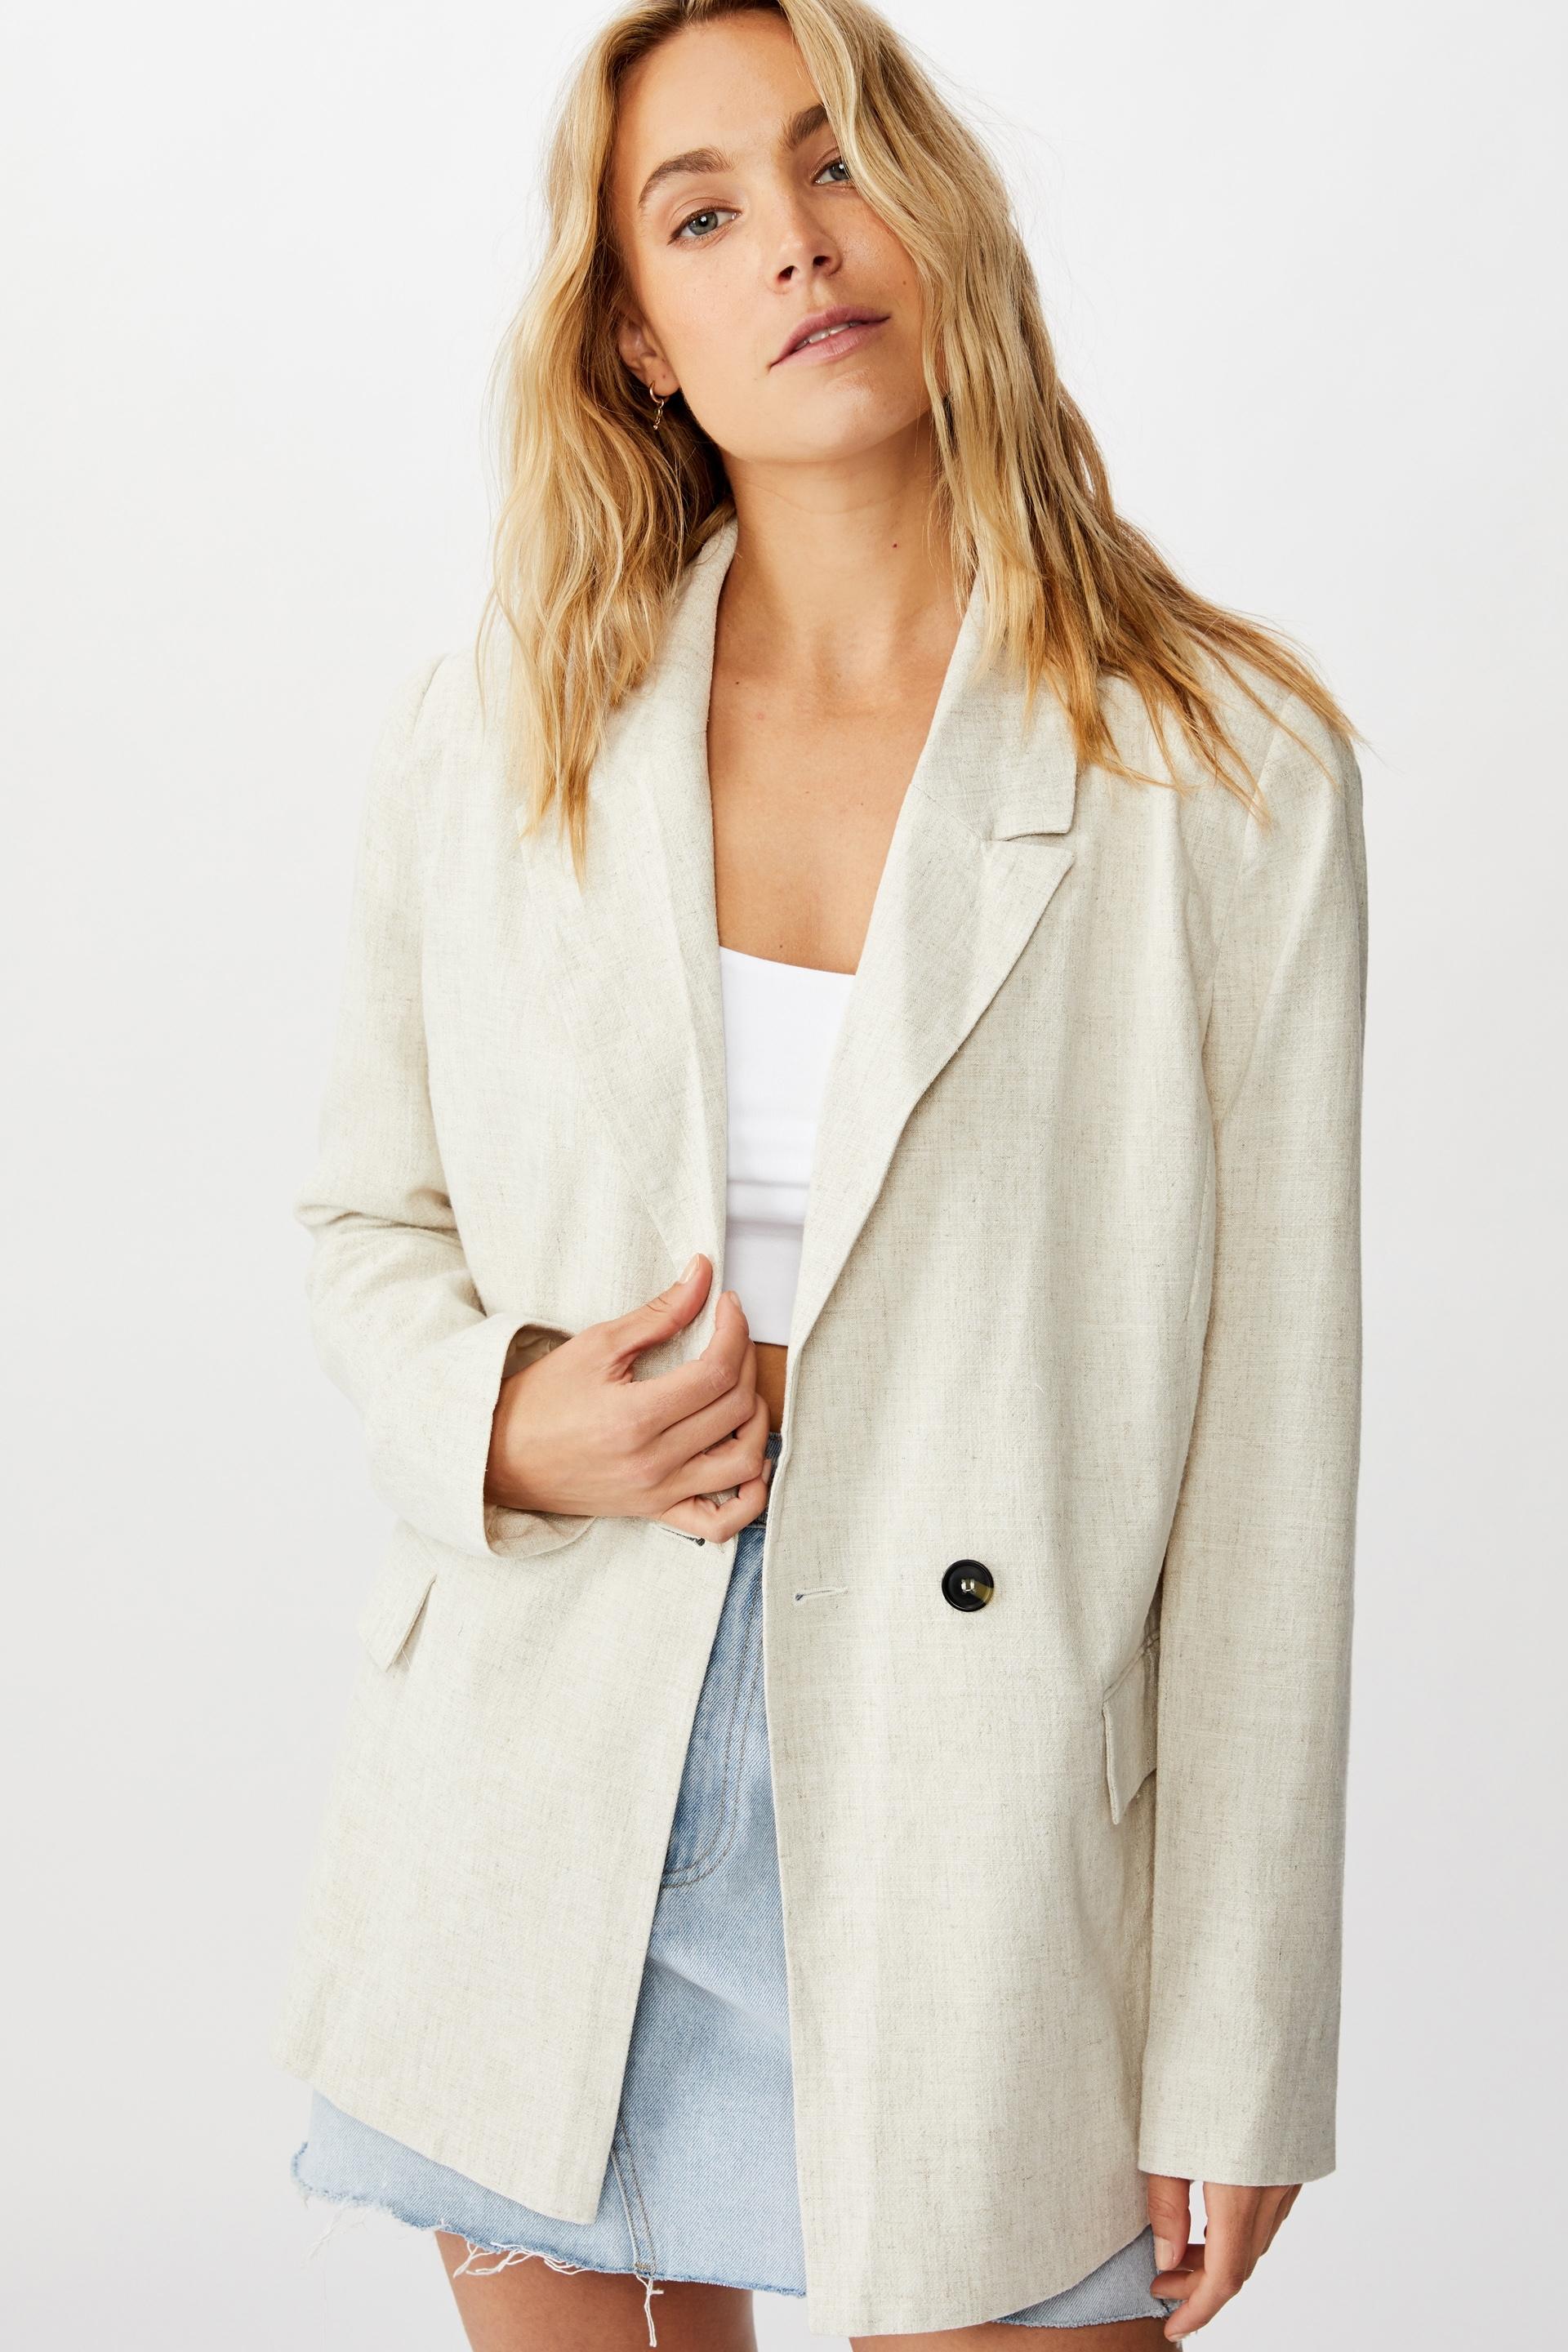 All day textured blazer - natural fleck Cotton On Jackets | Superbalist.com